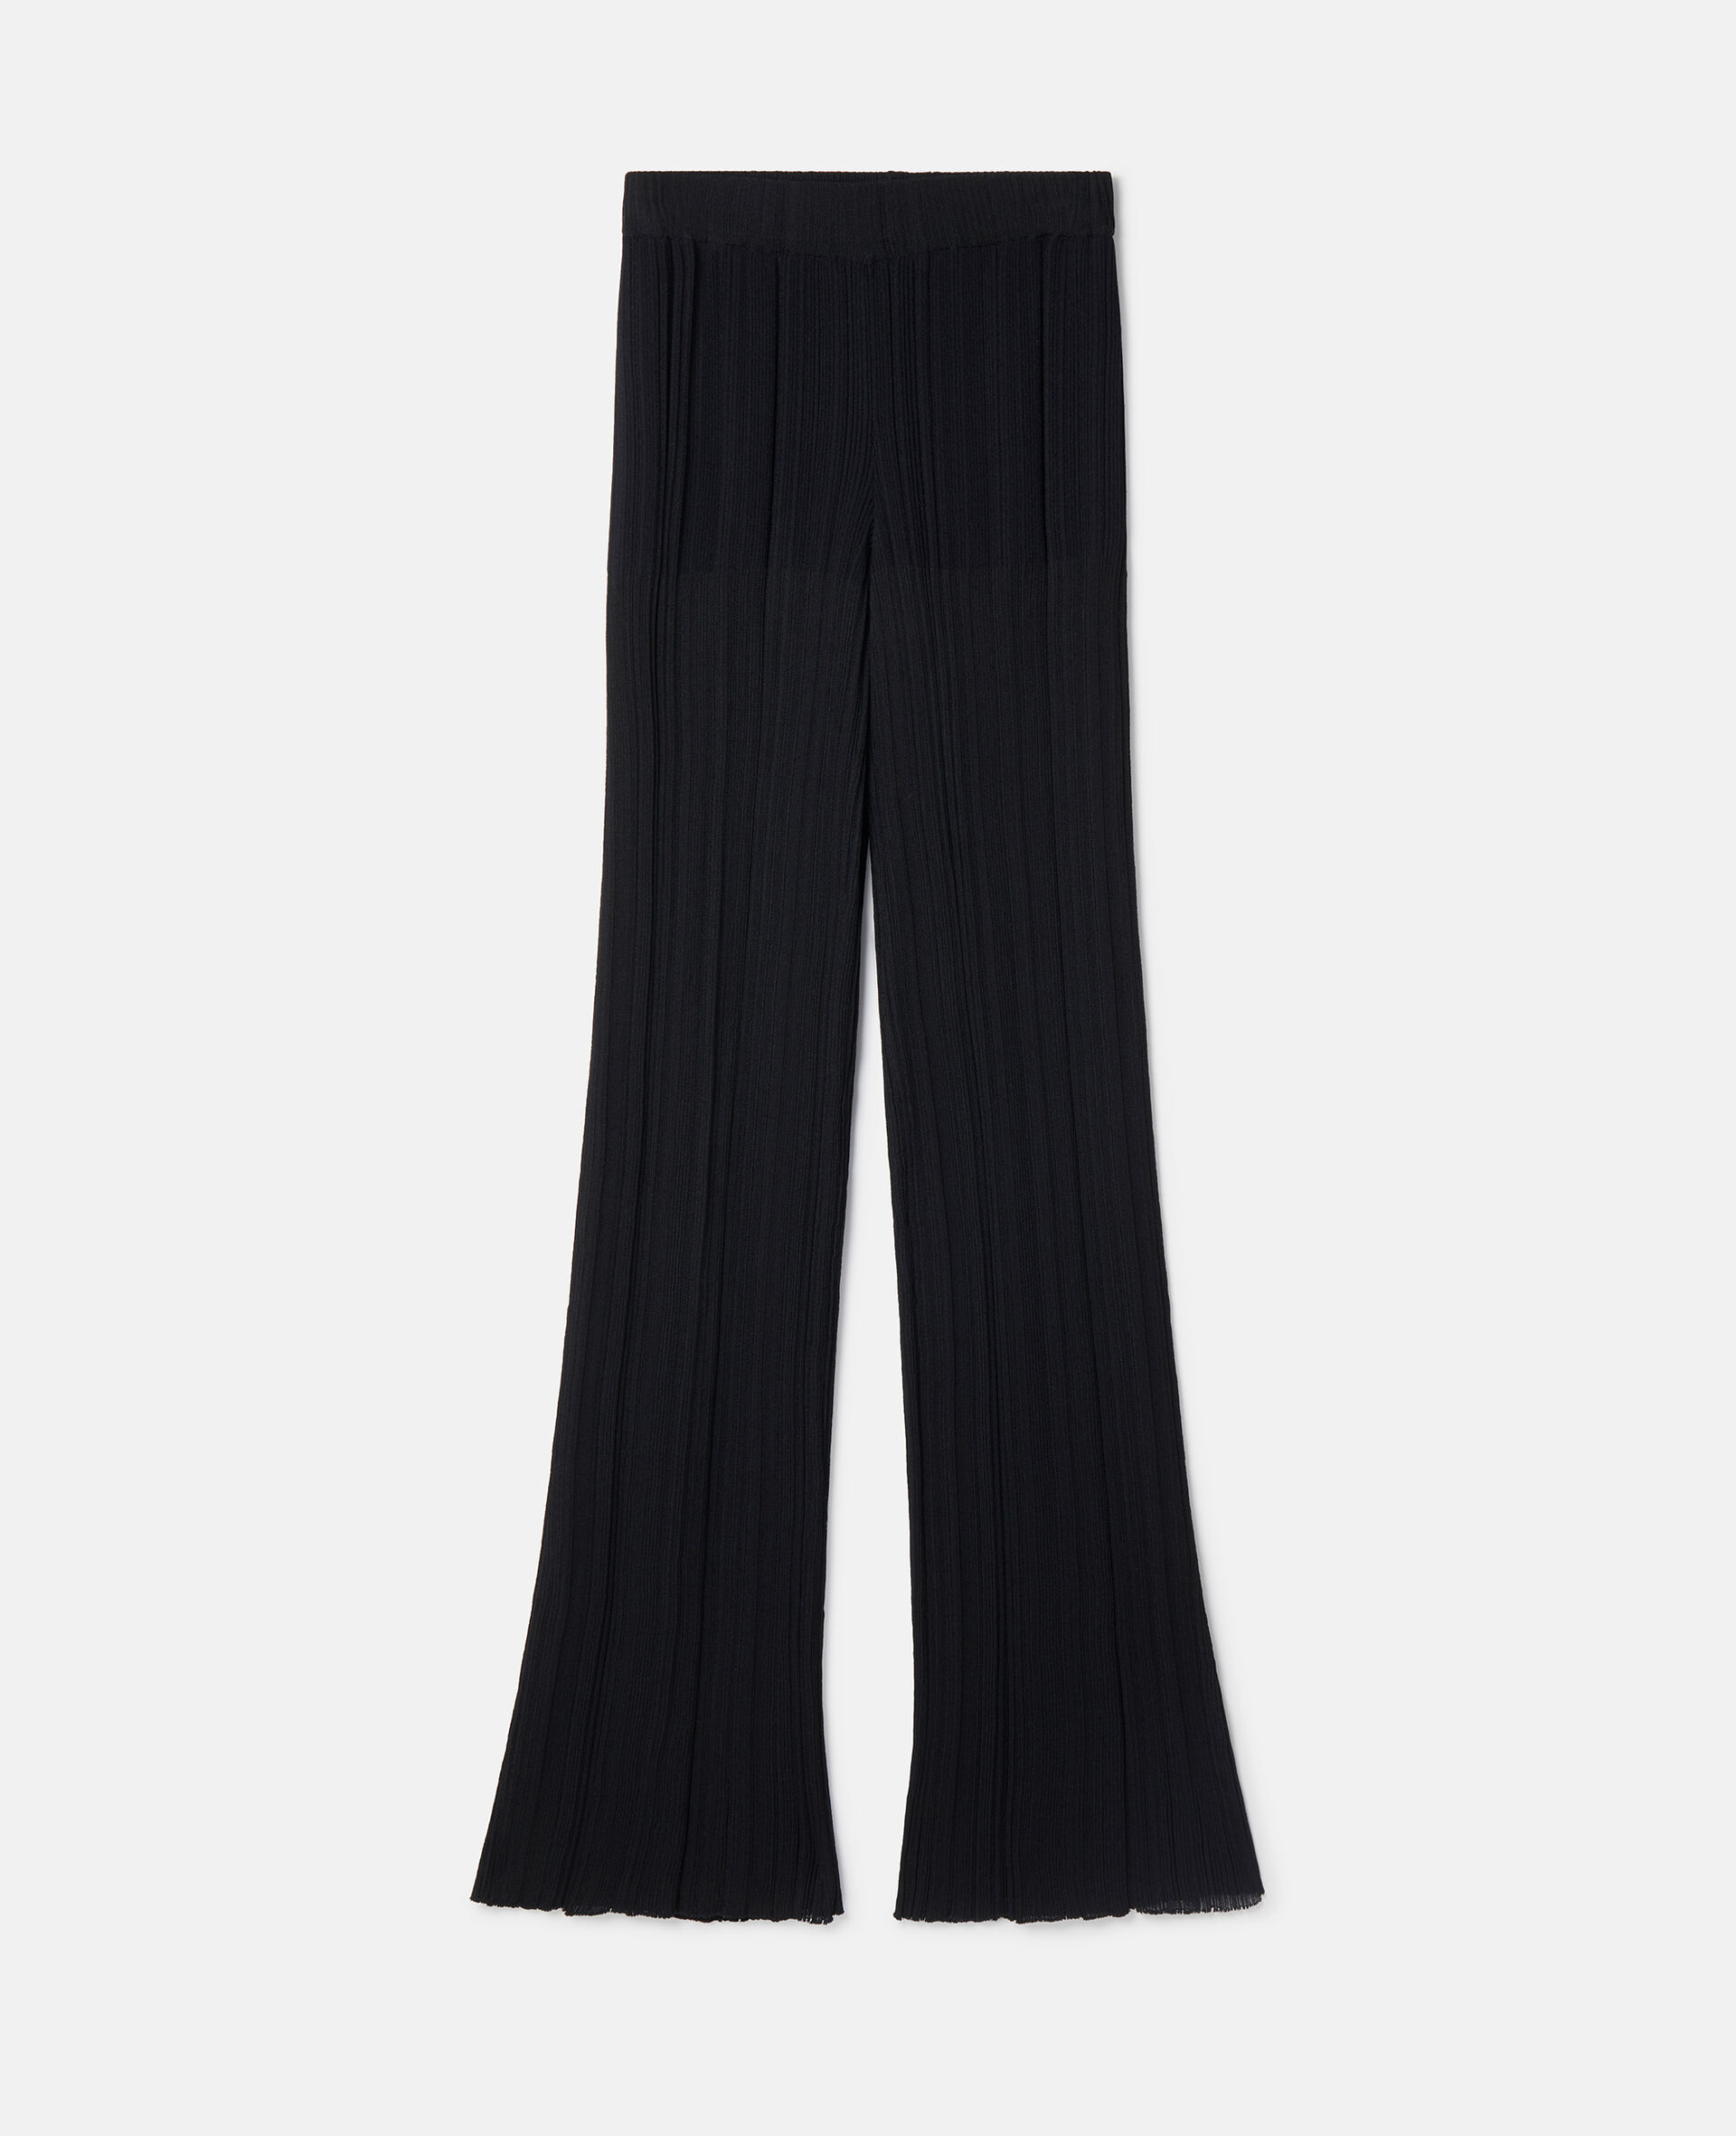 Pantaloni in maglia plissé-Nero-medium